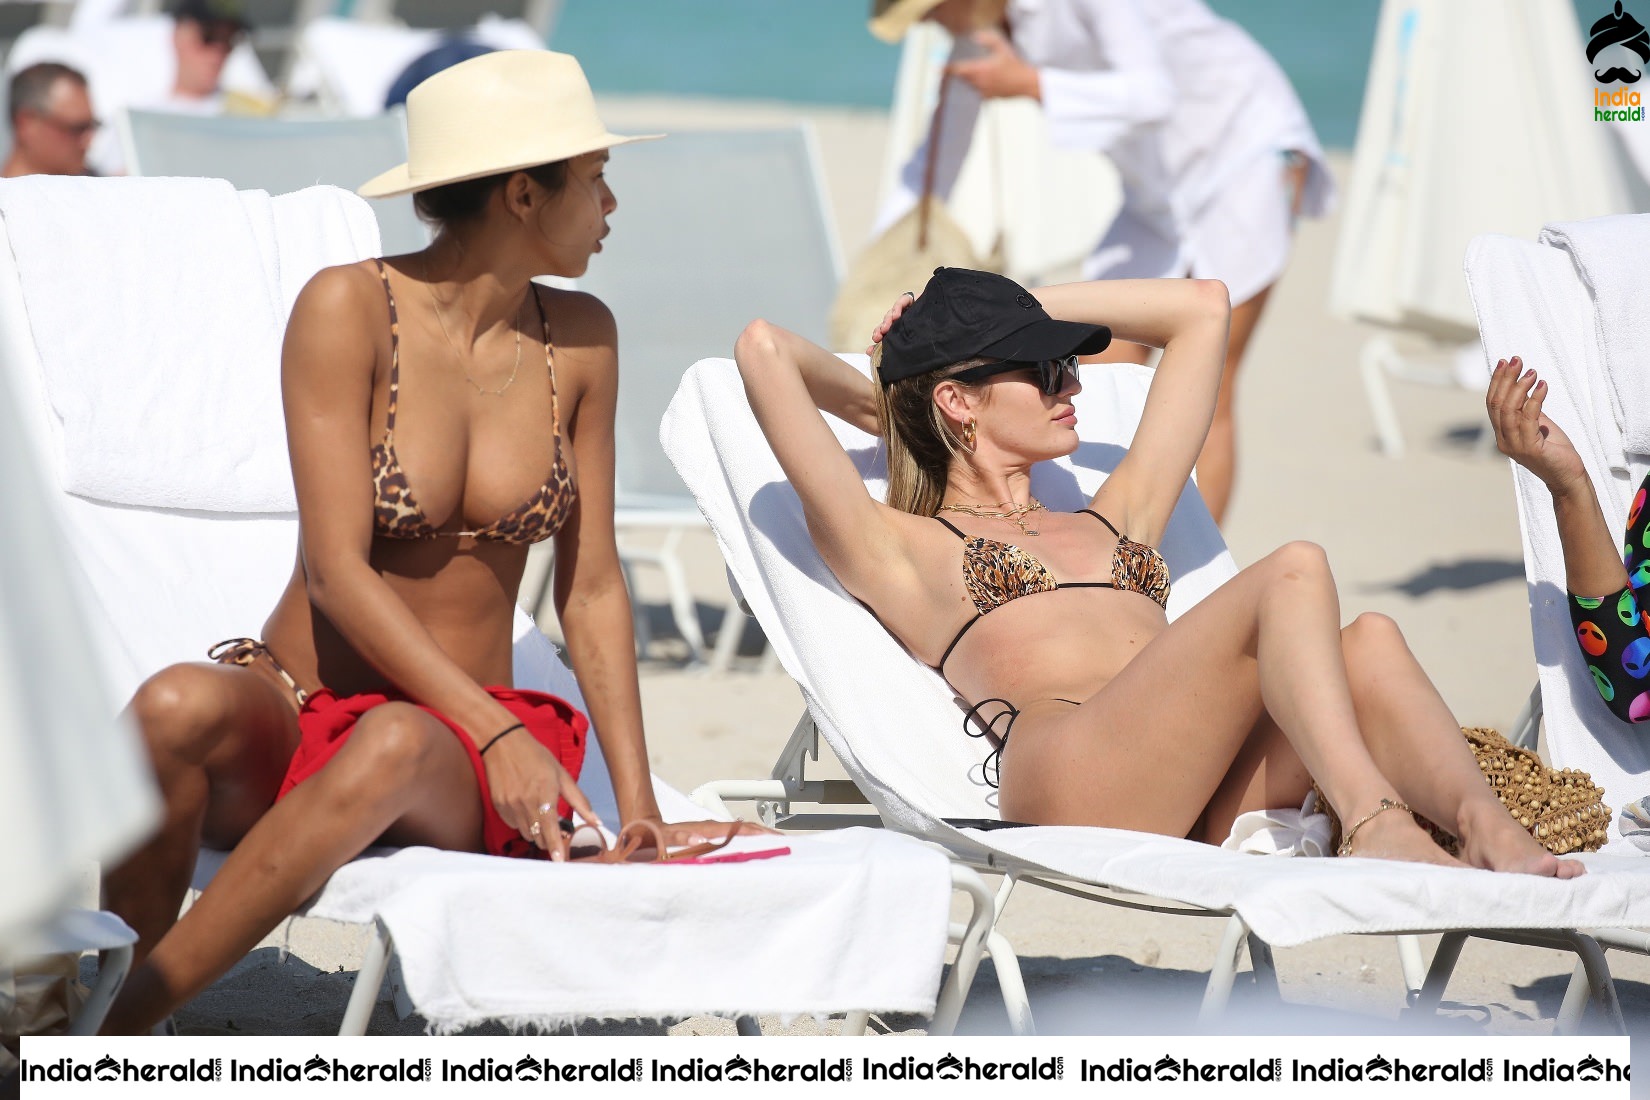 Candice Swanepoel and Lais Ribeiro seen in Bikini on the beach in Miami Set 3